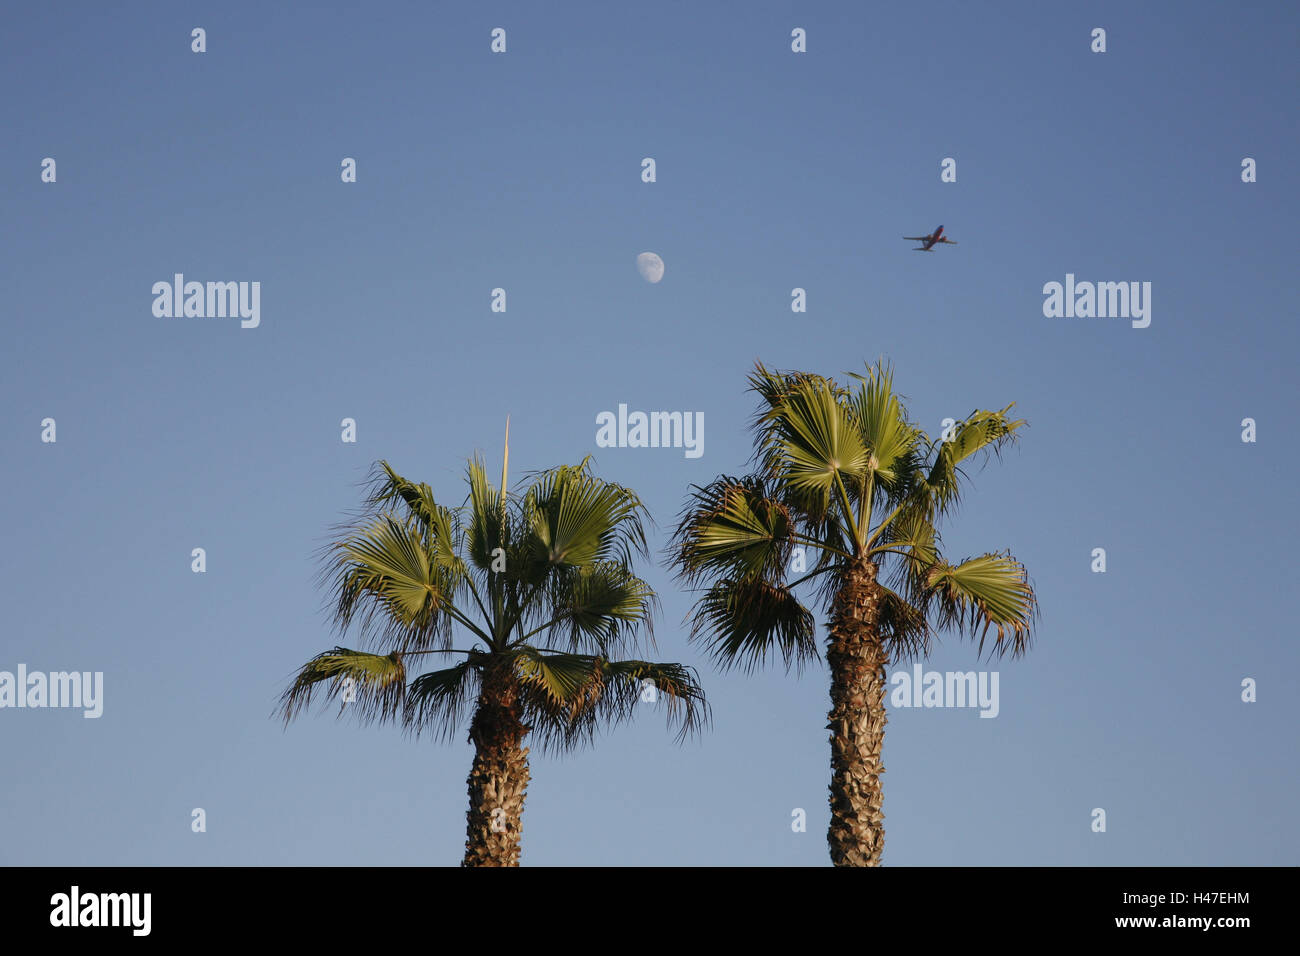 The USA, California, San Diego, mission Bay, palms, Stock Photo